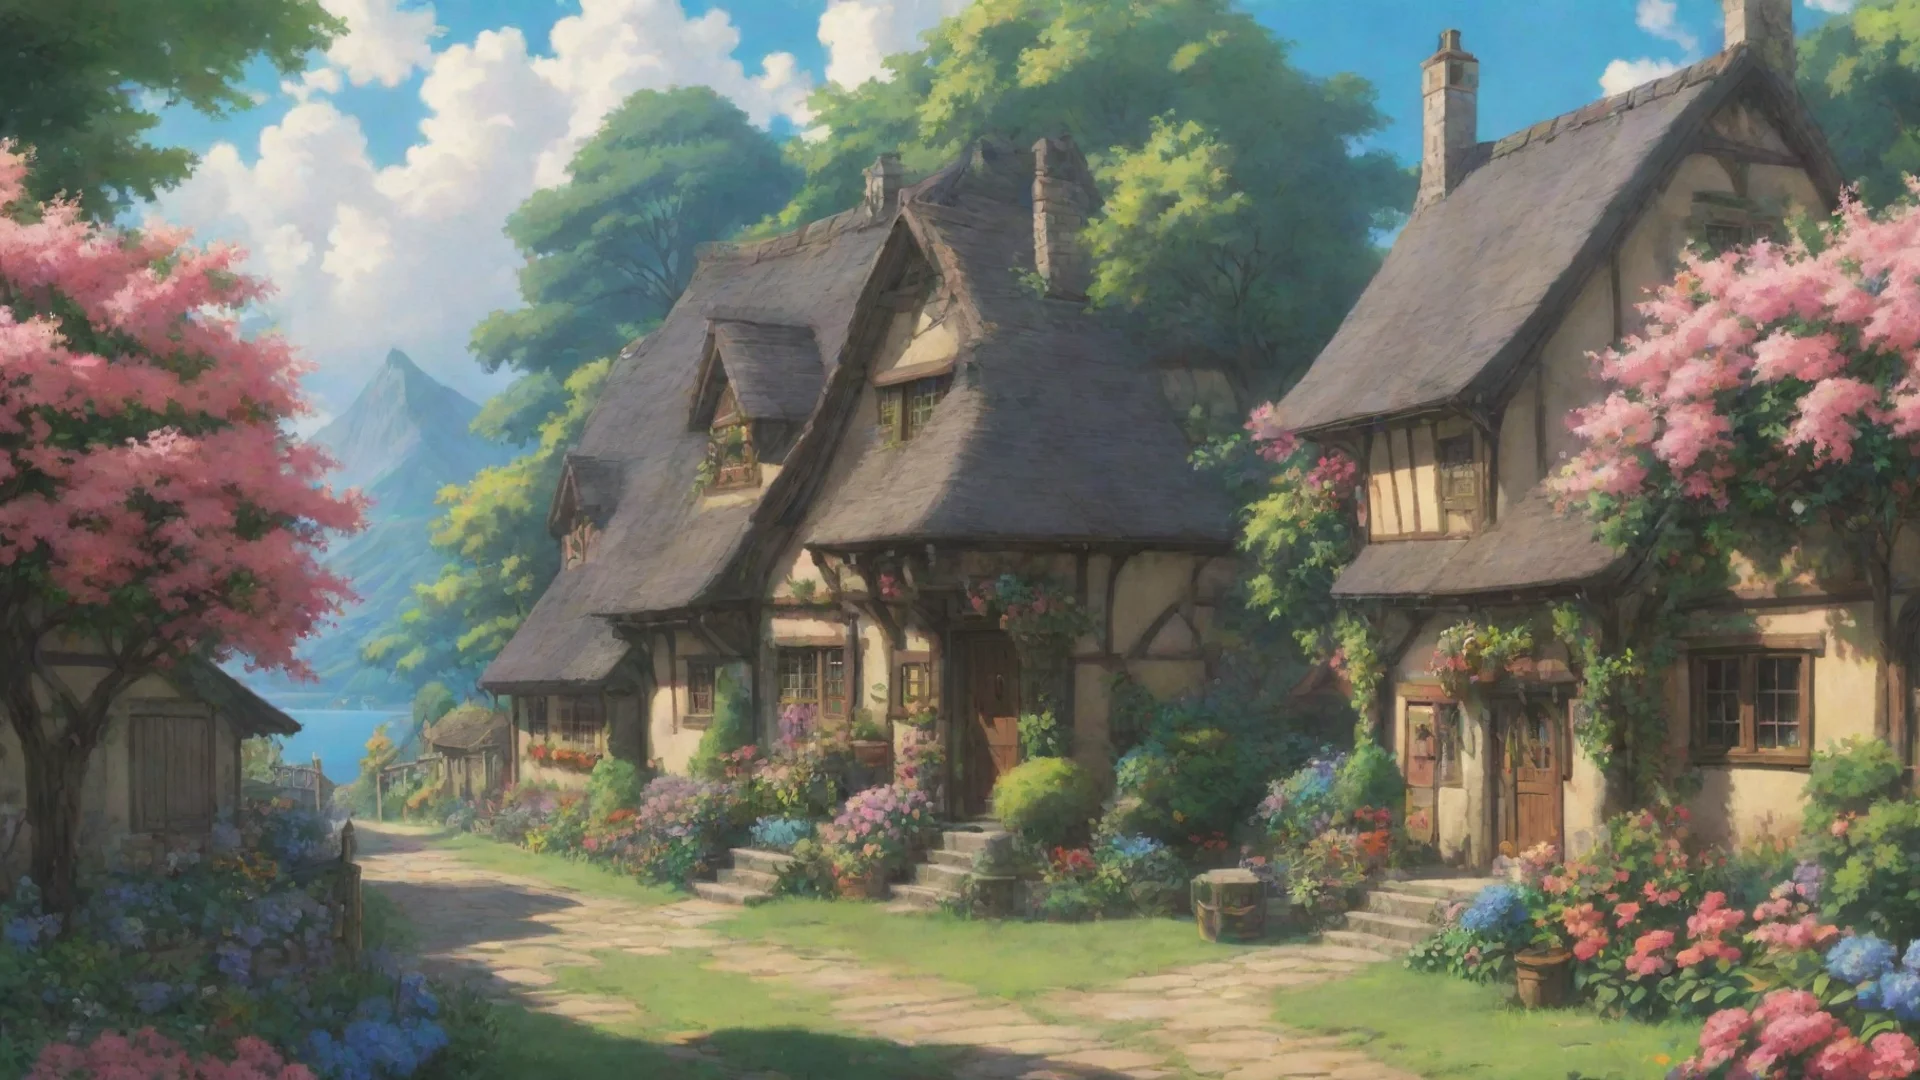 trending wonderful ghibli landscape epic anime hd aesthetic town cottages flowers good looking fantastic 1 wide